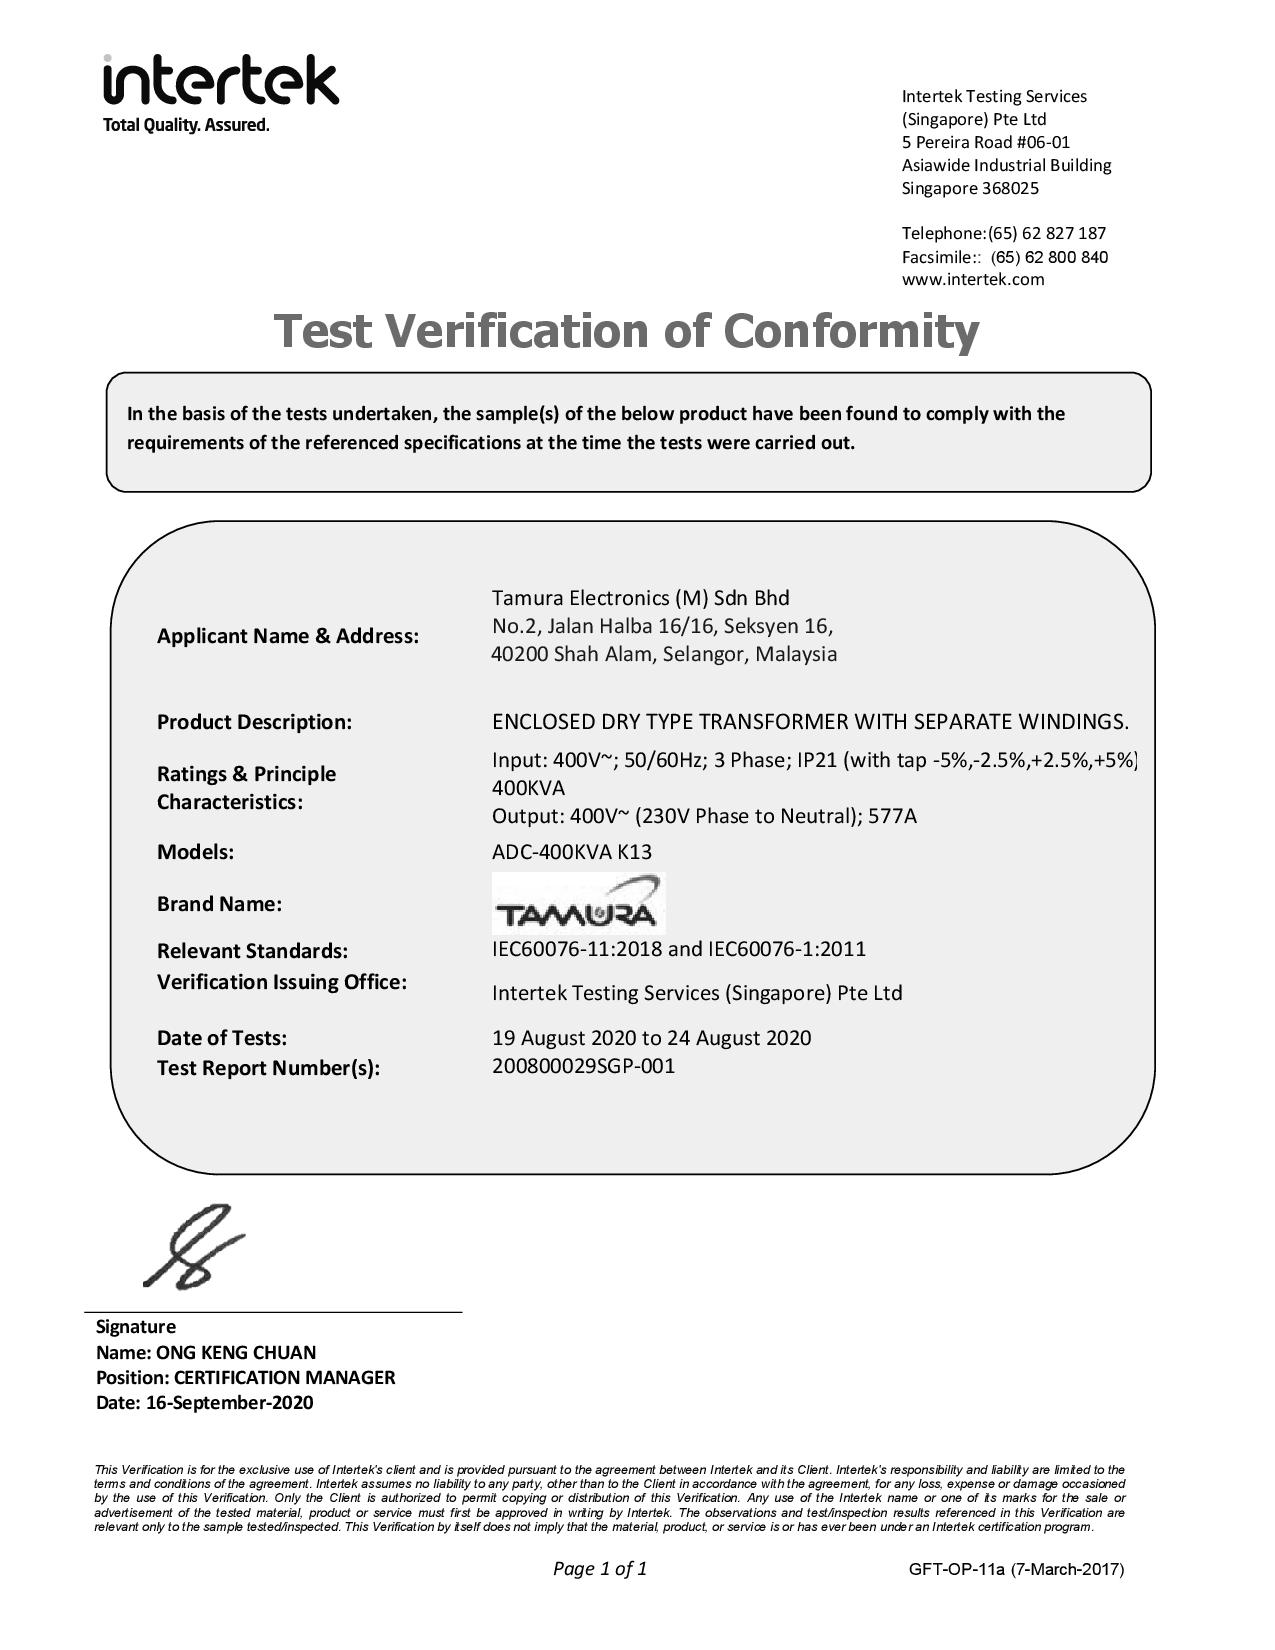 Type Test VOC IEC60076